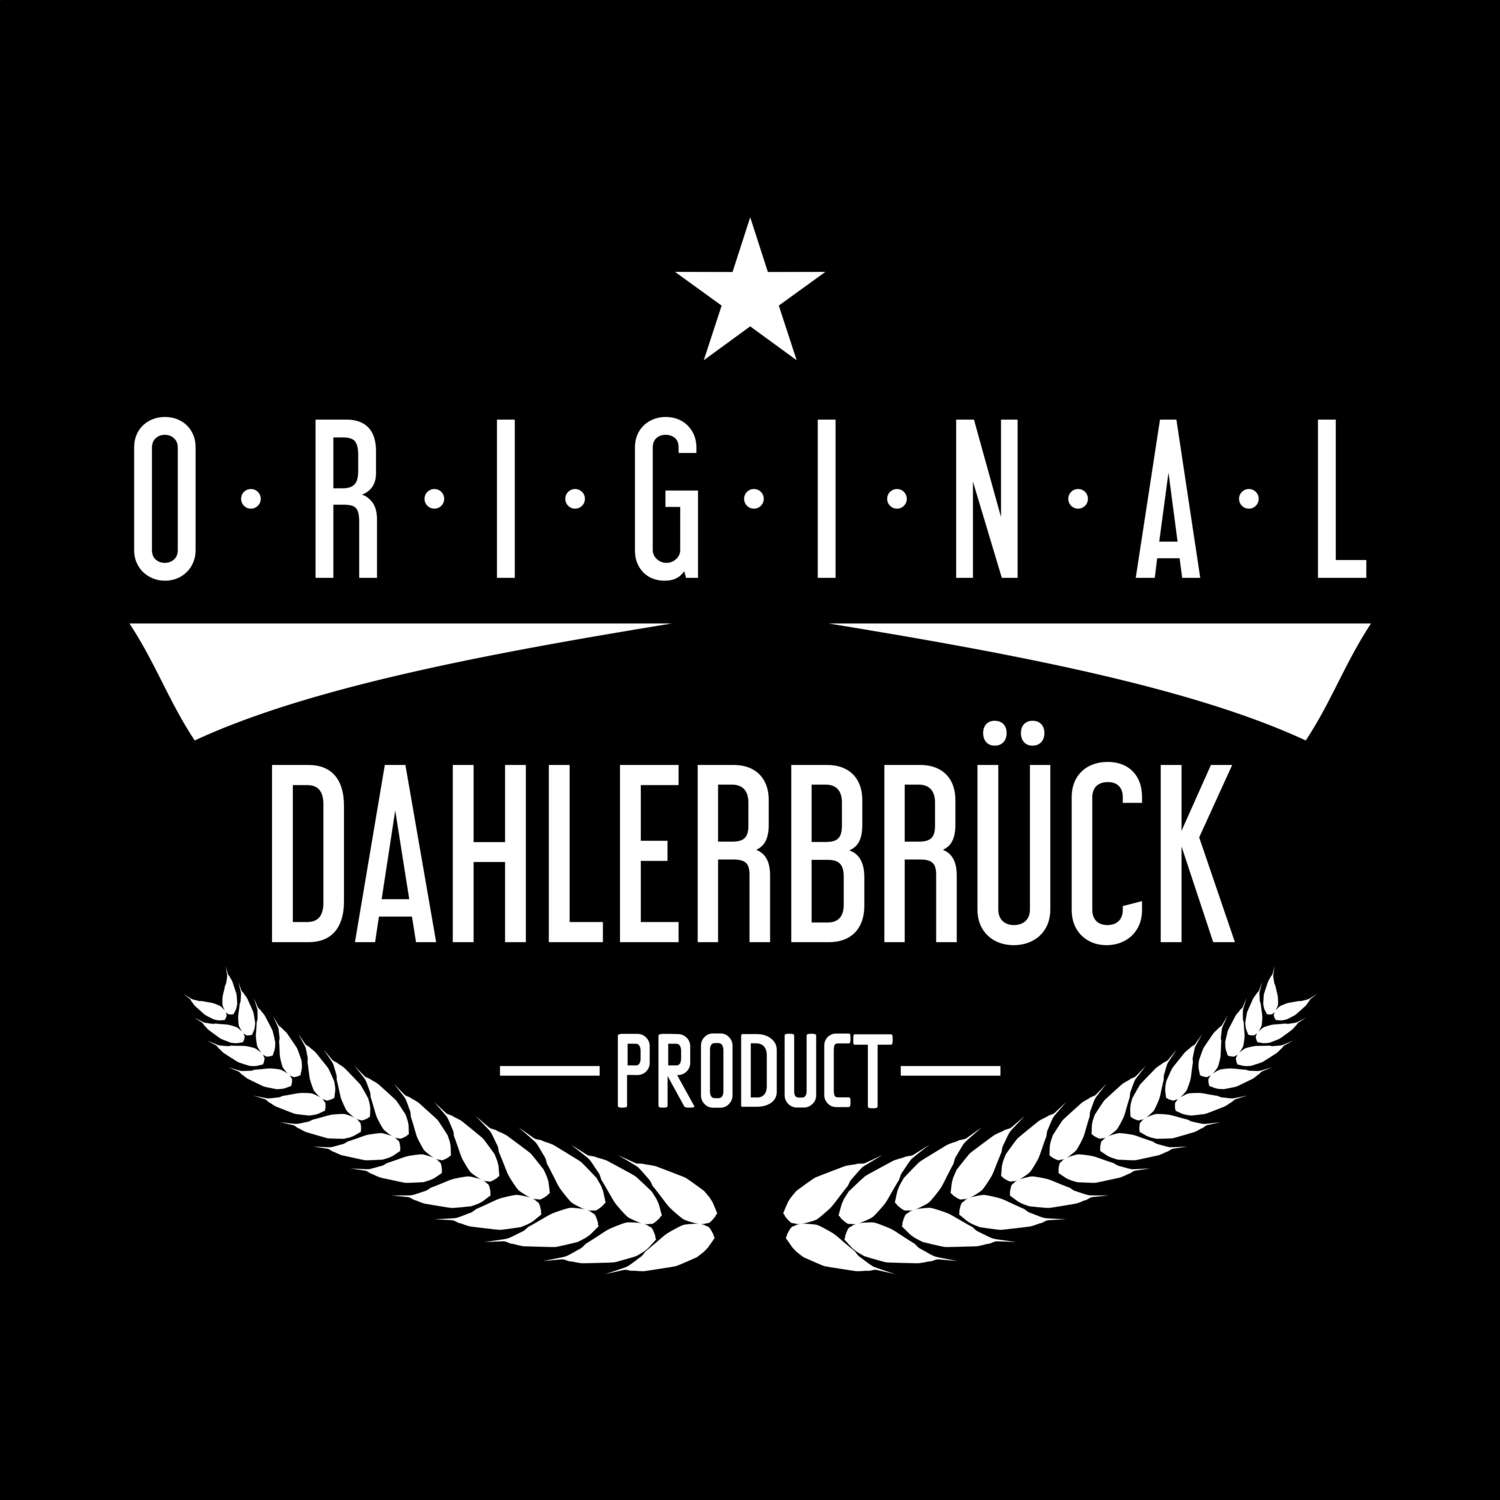 Dahlerbrück T-Shirt »Original Product«